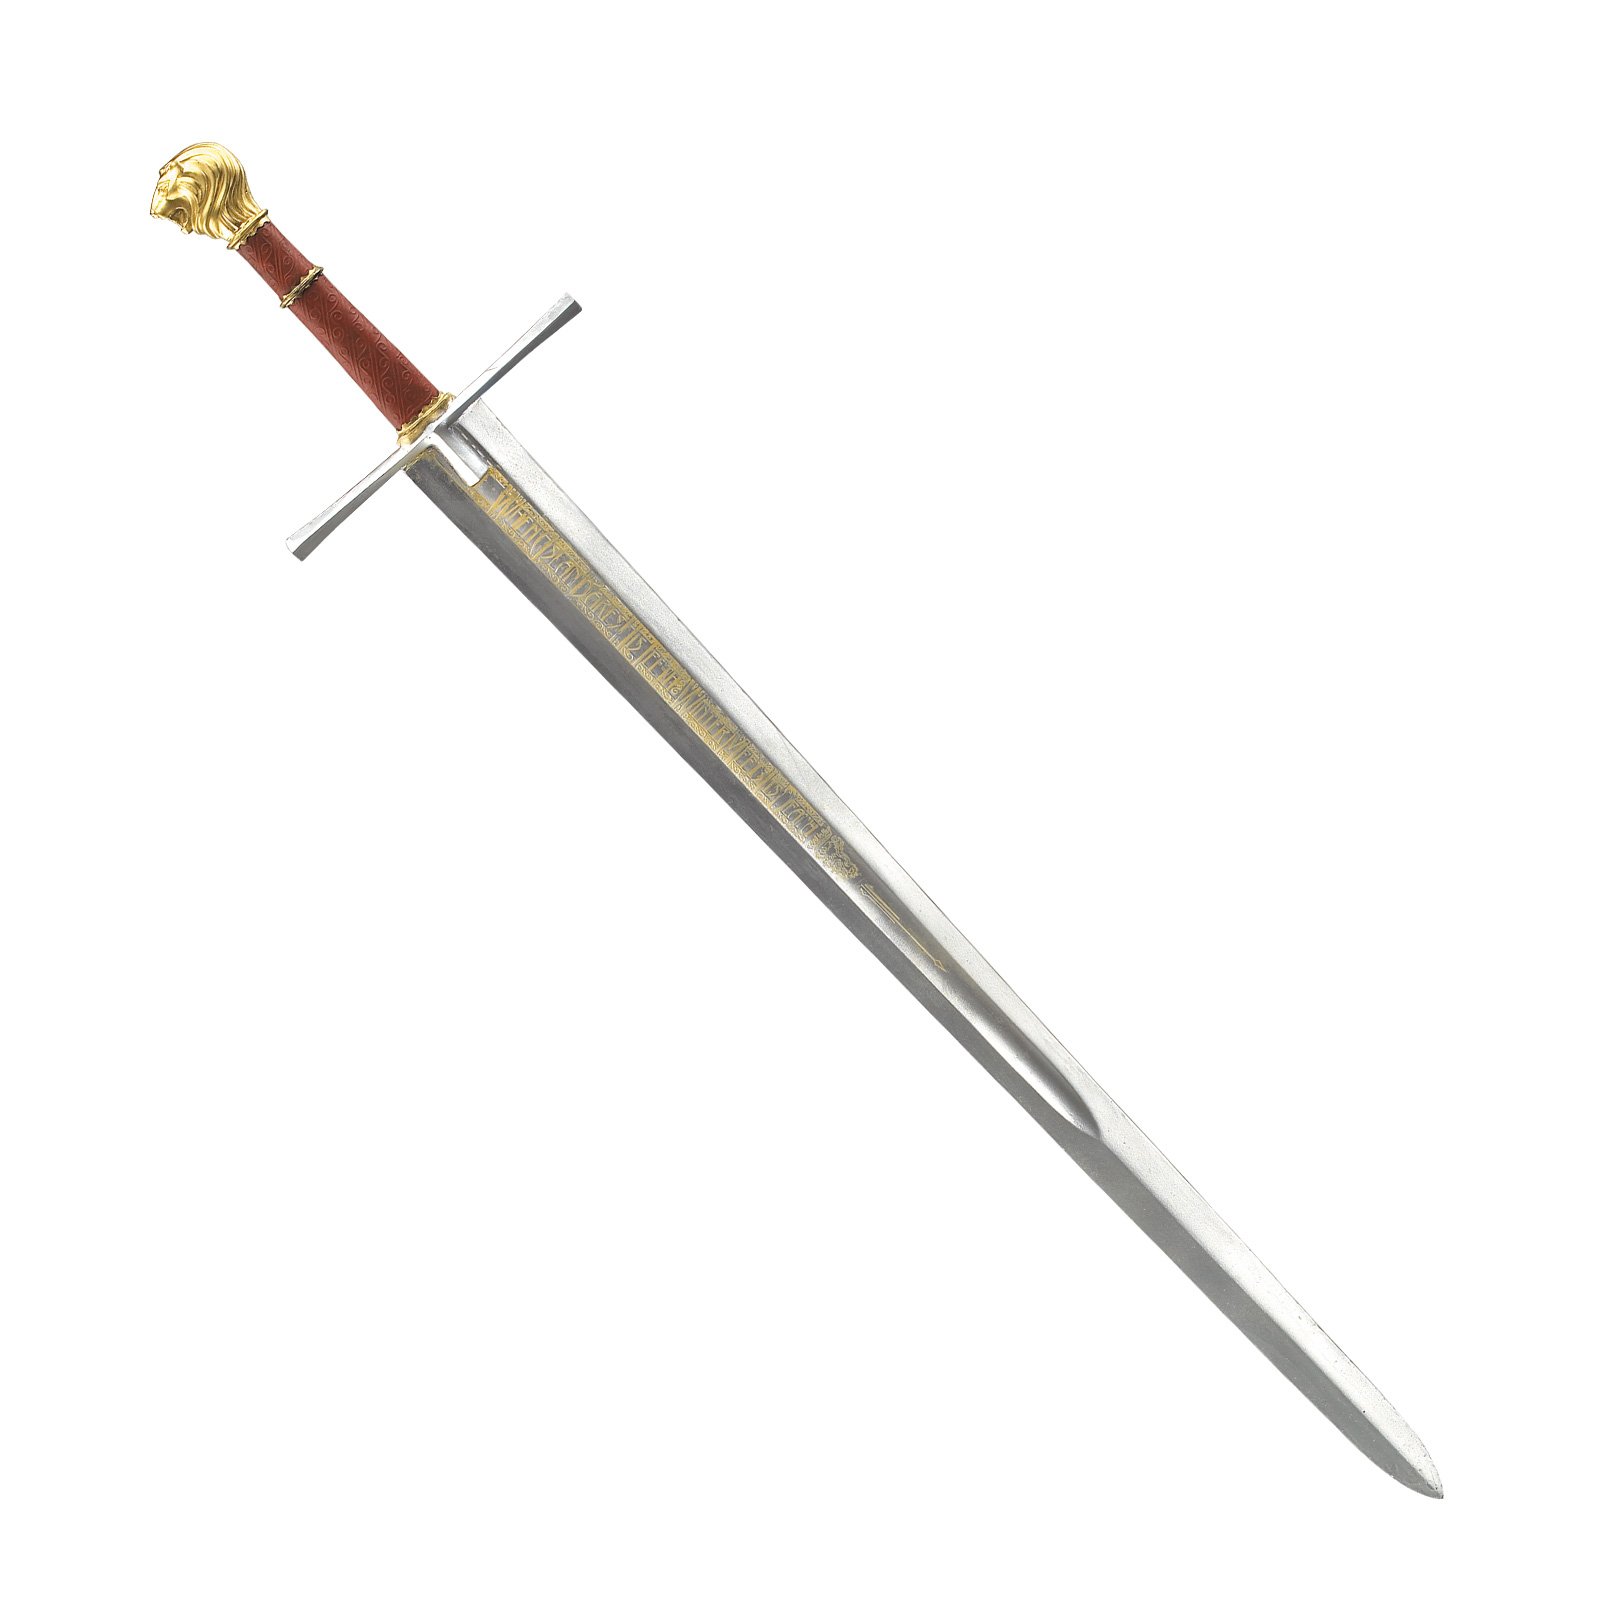 A Brief Guide to Swords